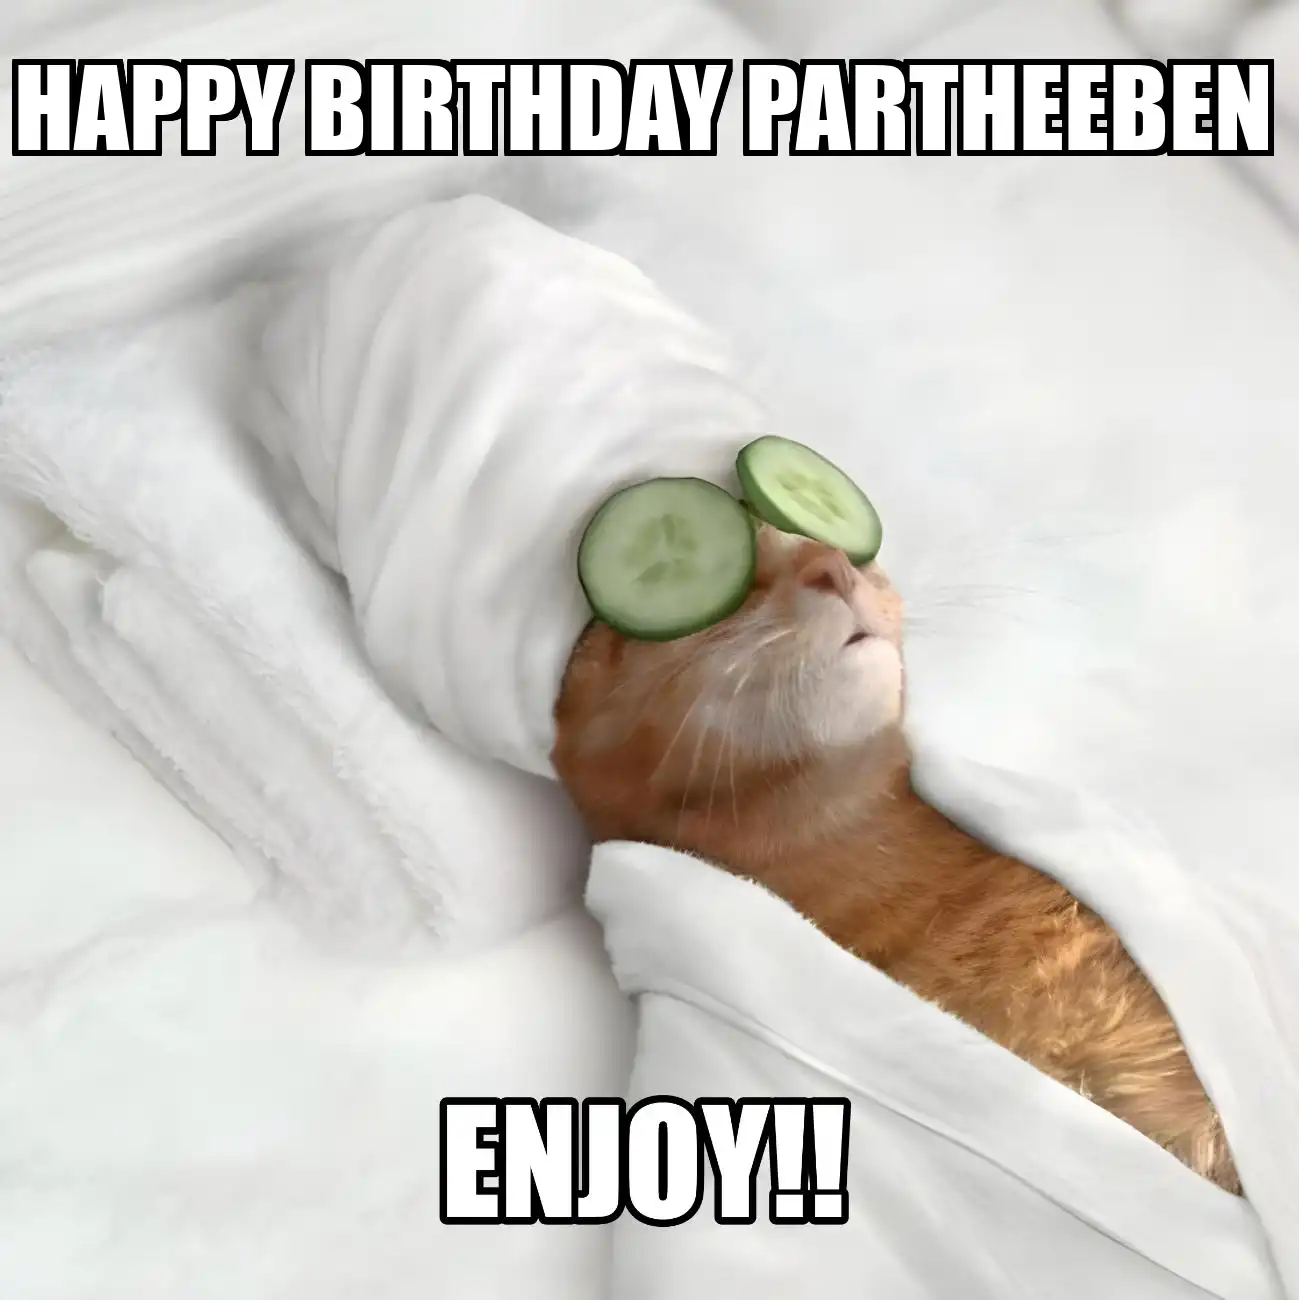 Happy Birthday Partheeben Enjoy Cat Meme